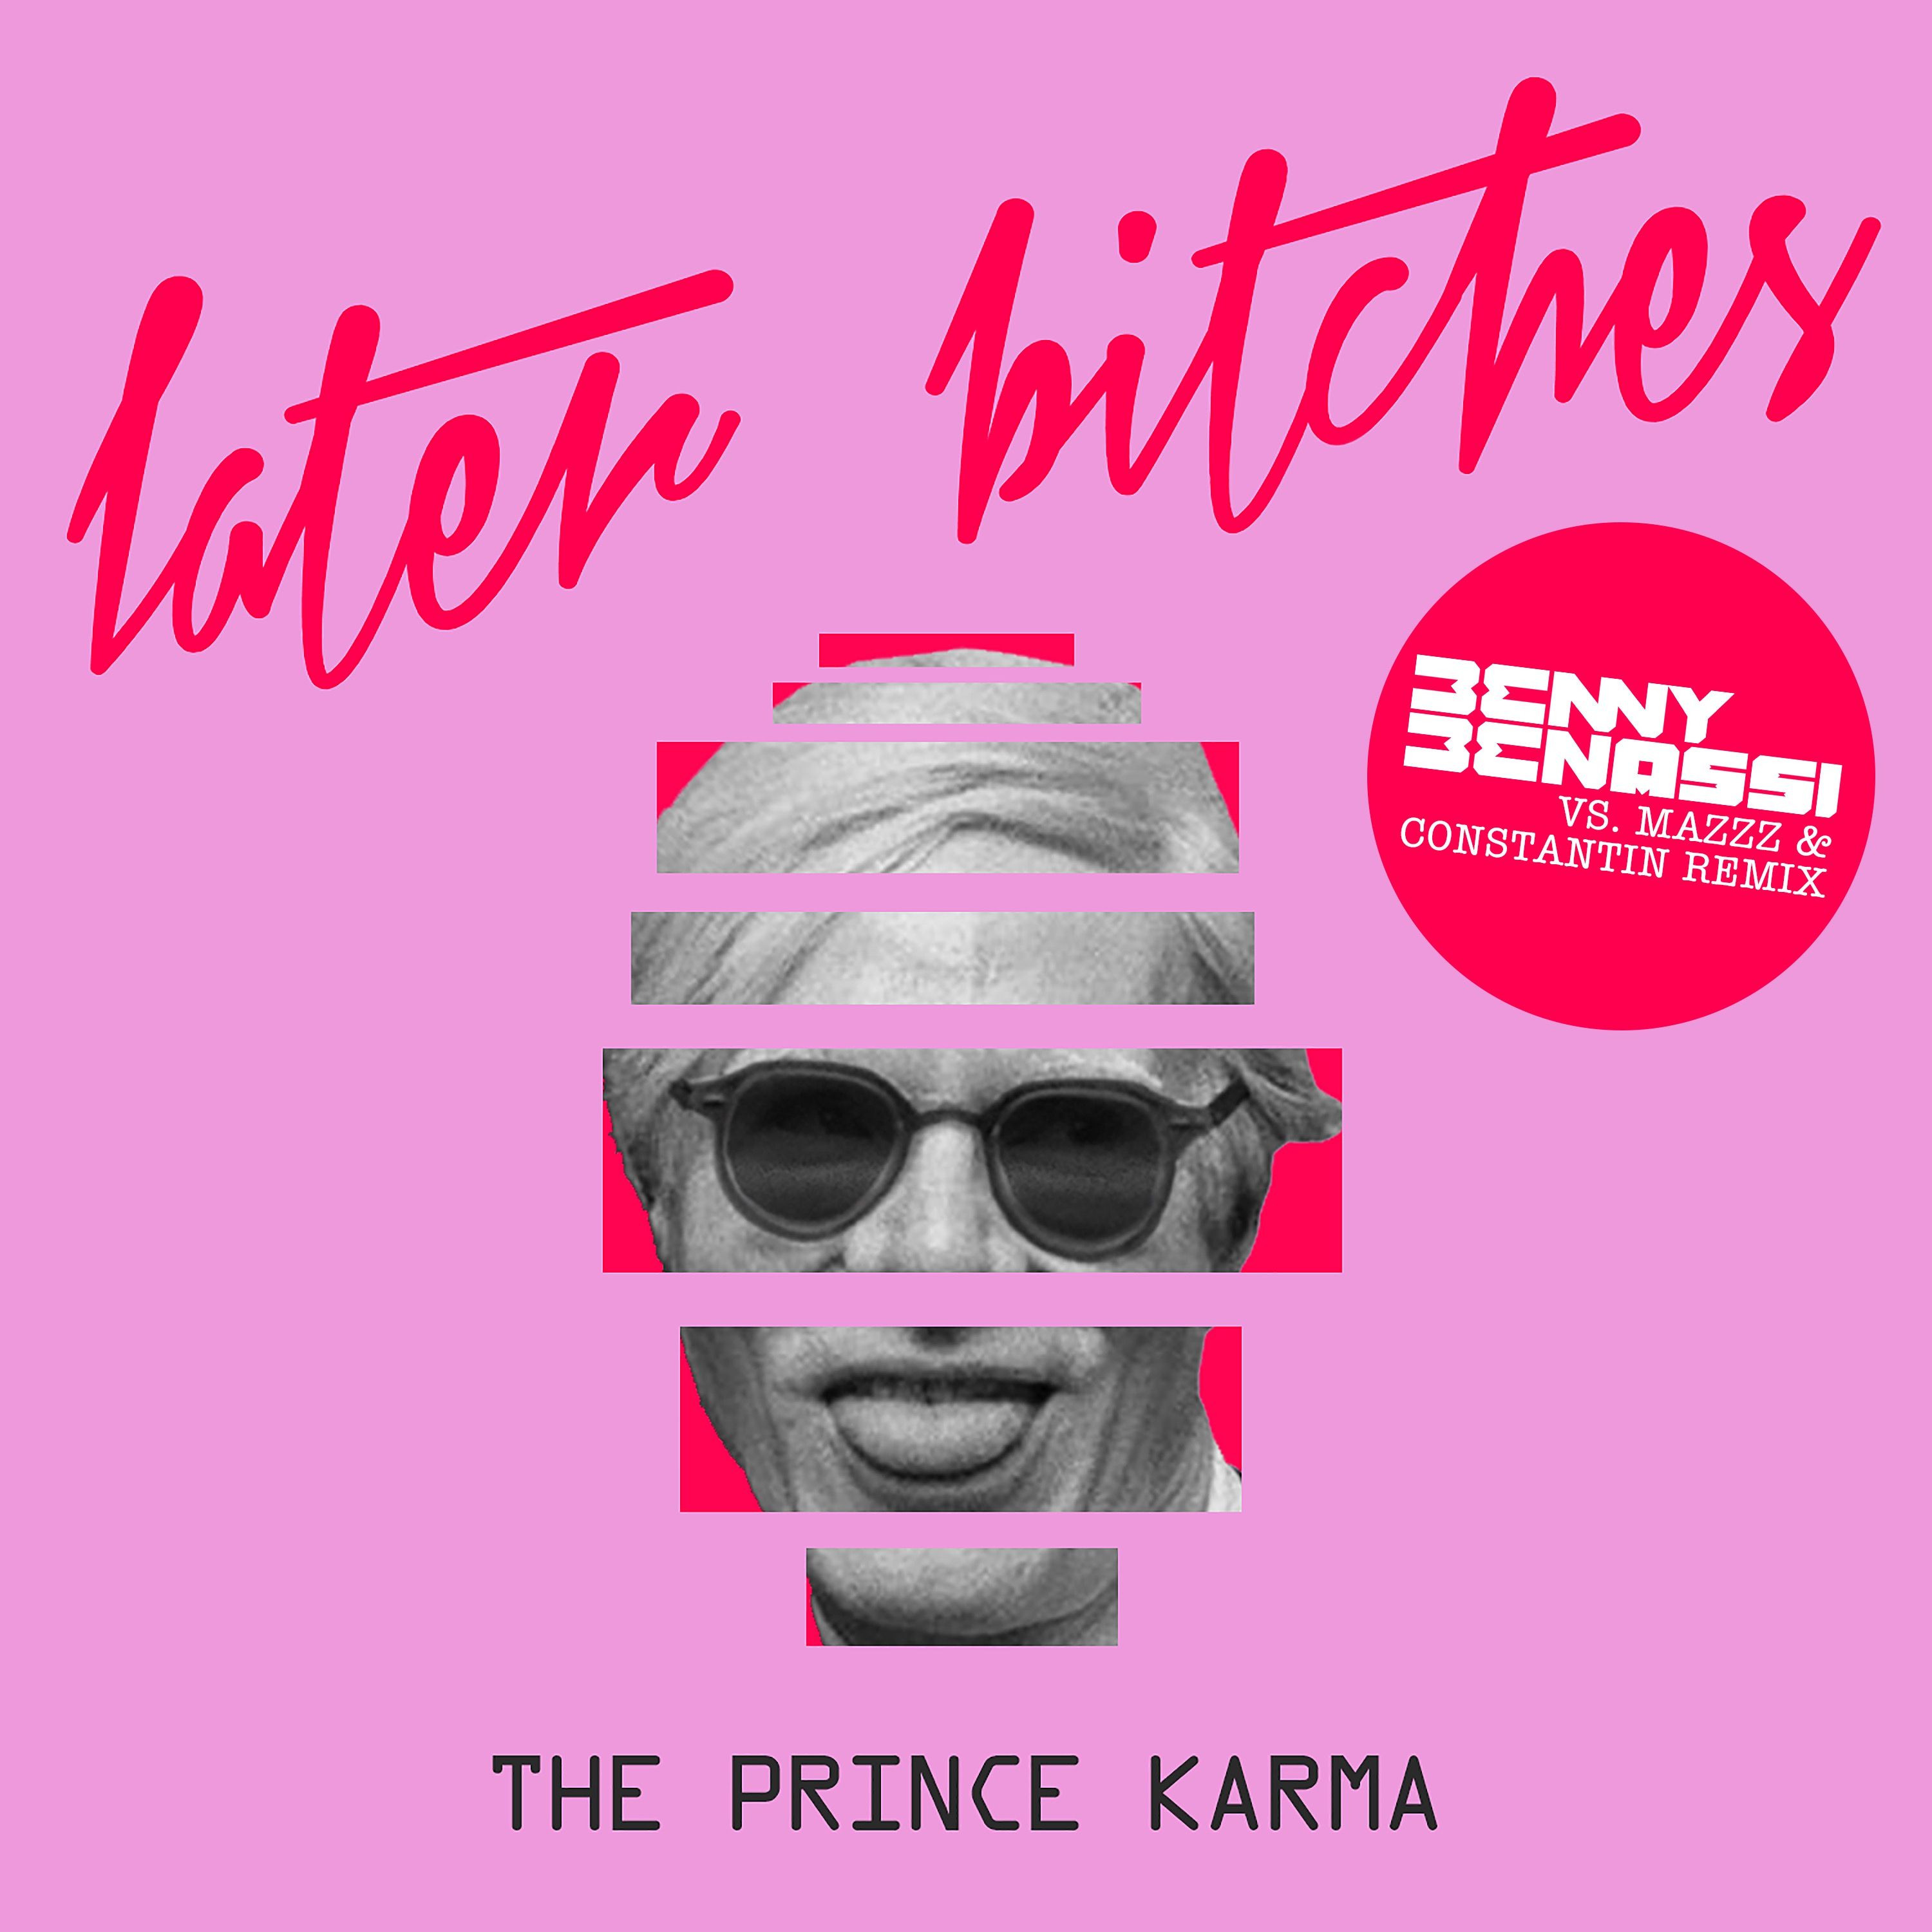 Télécharger The Prince Karma - Later Bitches (Benny Benassi Vs. MazZz & Constantin Remix)